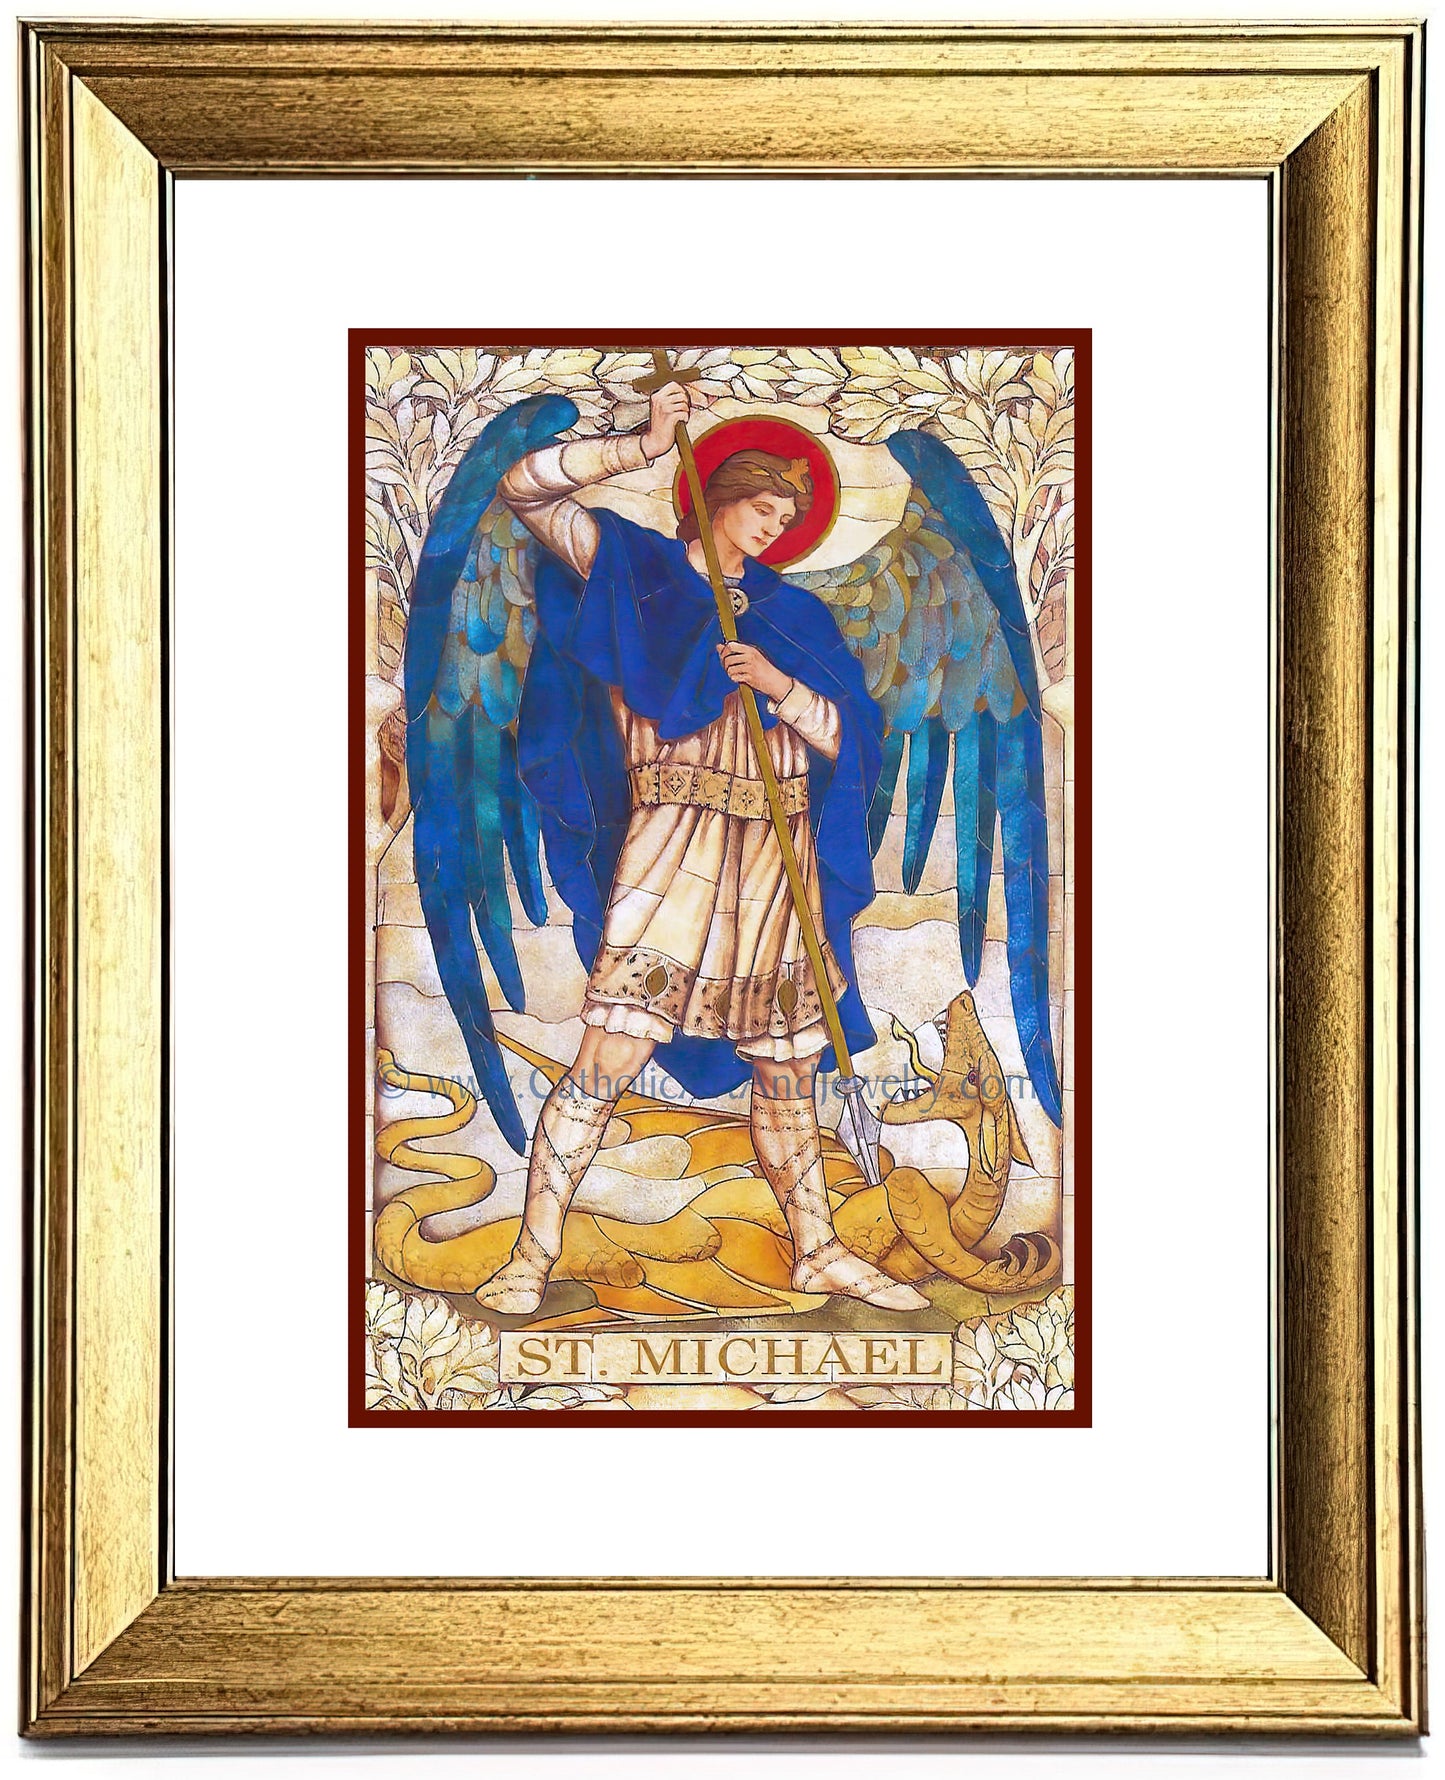 Archangel Michael – based on a Vintage Stained Glass Window – Art Nouveau – Catholic Art Print – Archival – Catholic Gift – Angel